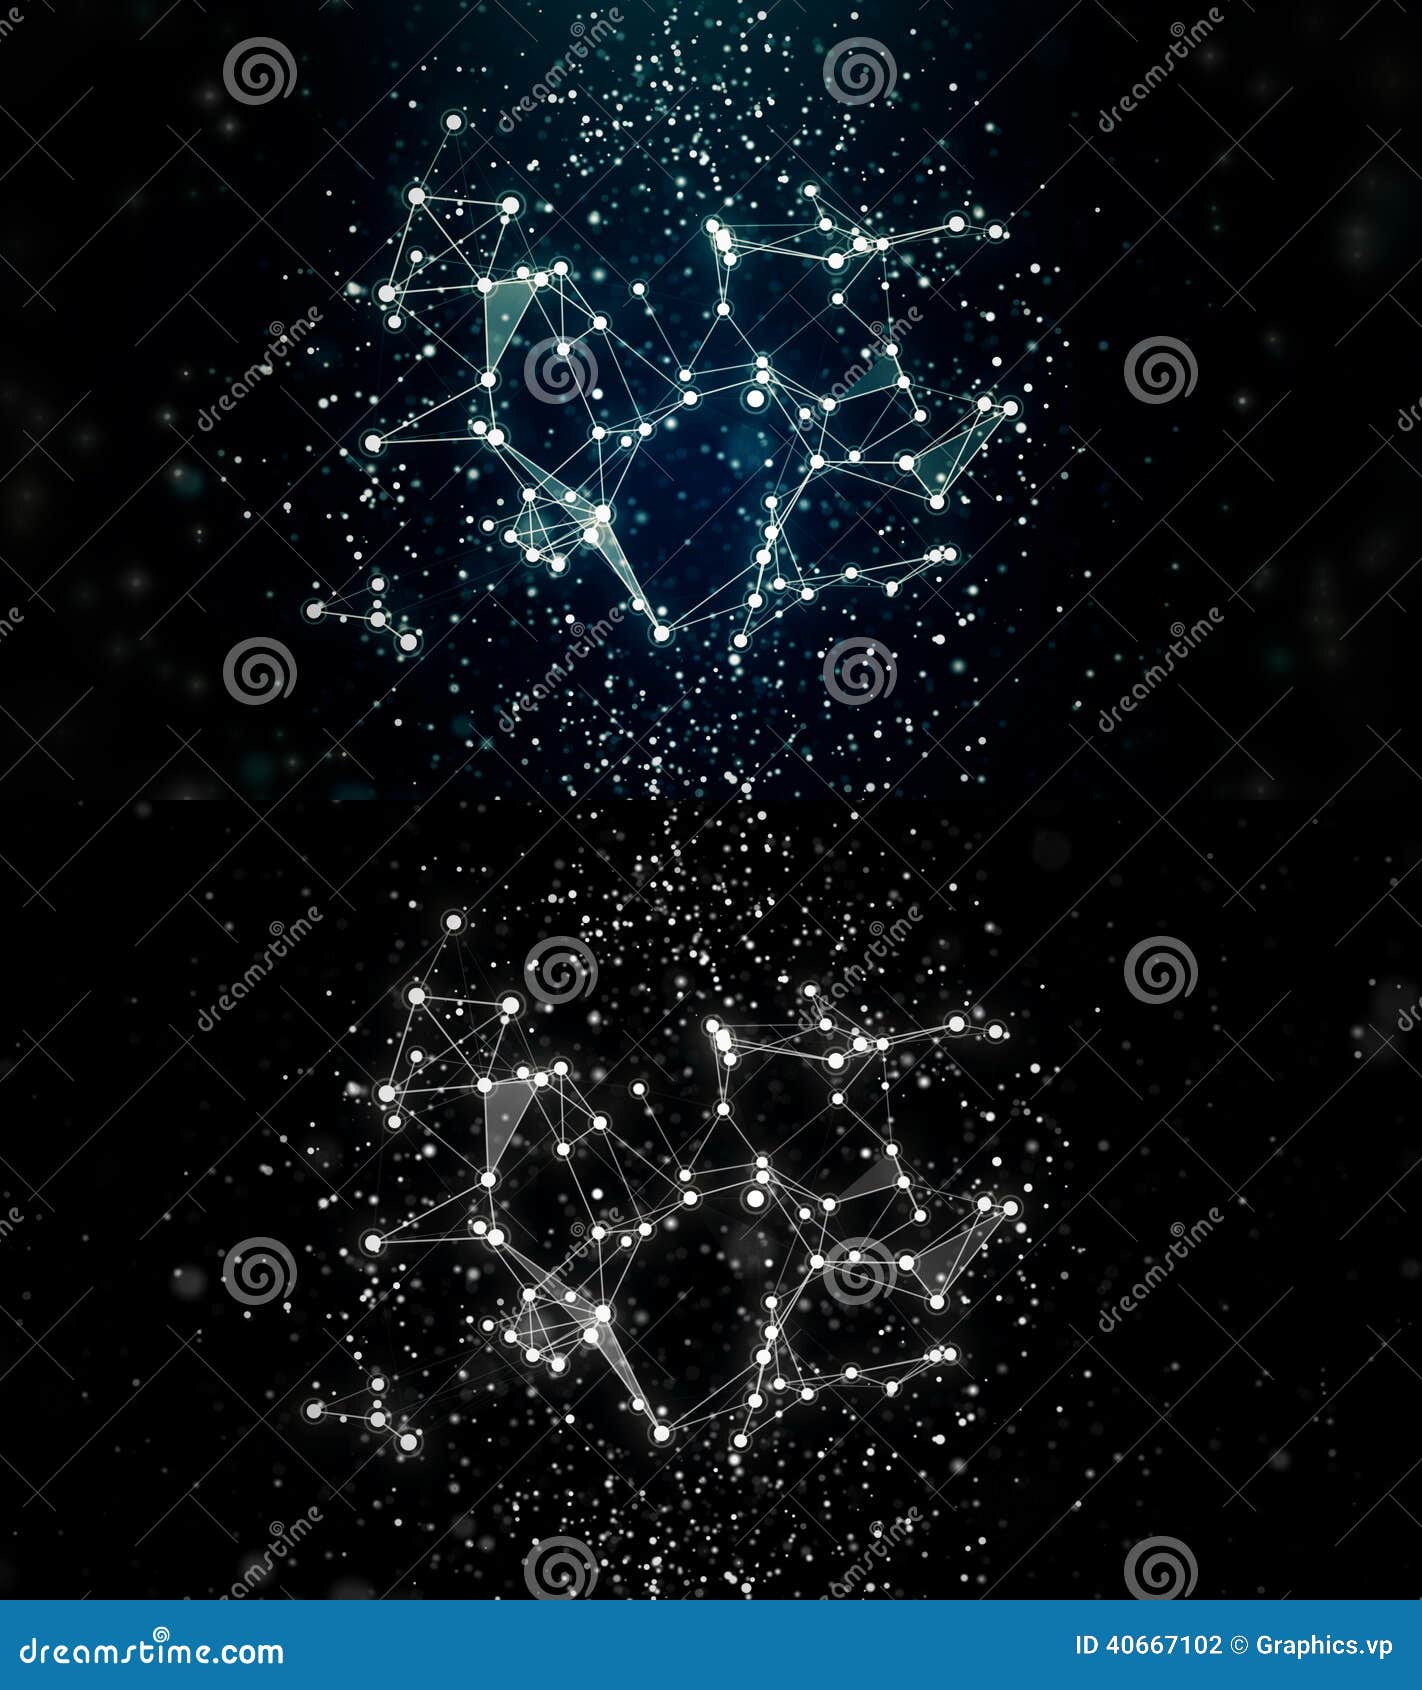 alpha constellation